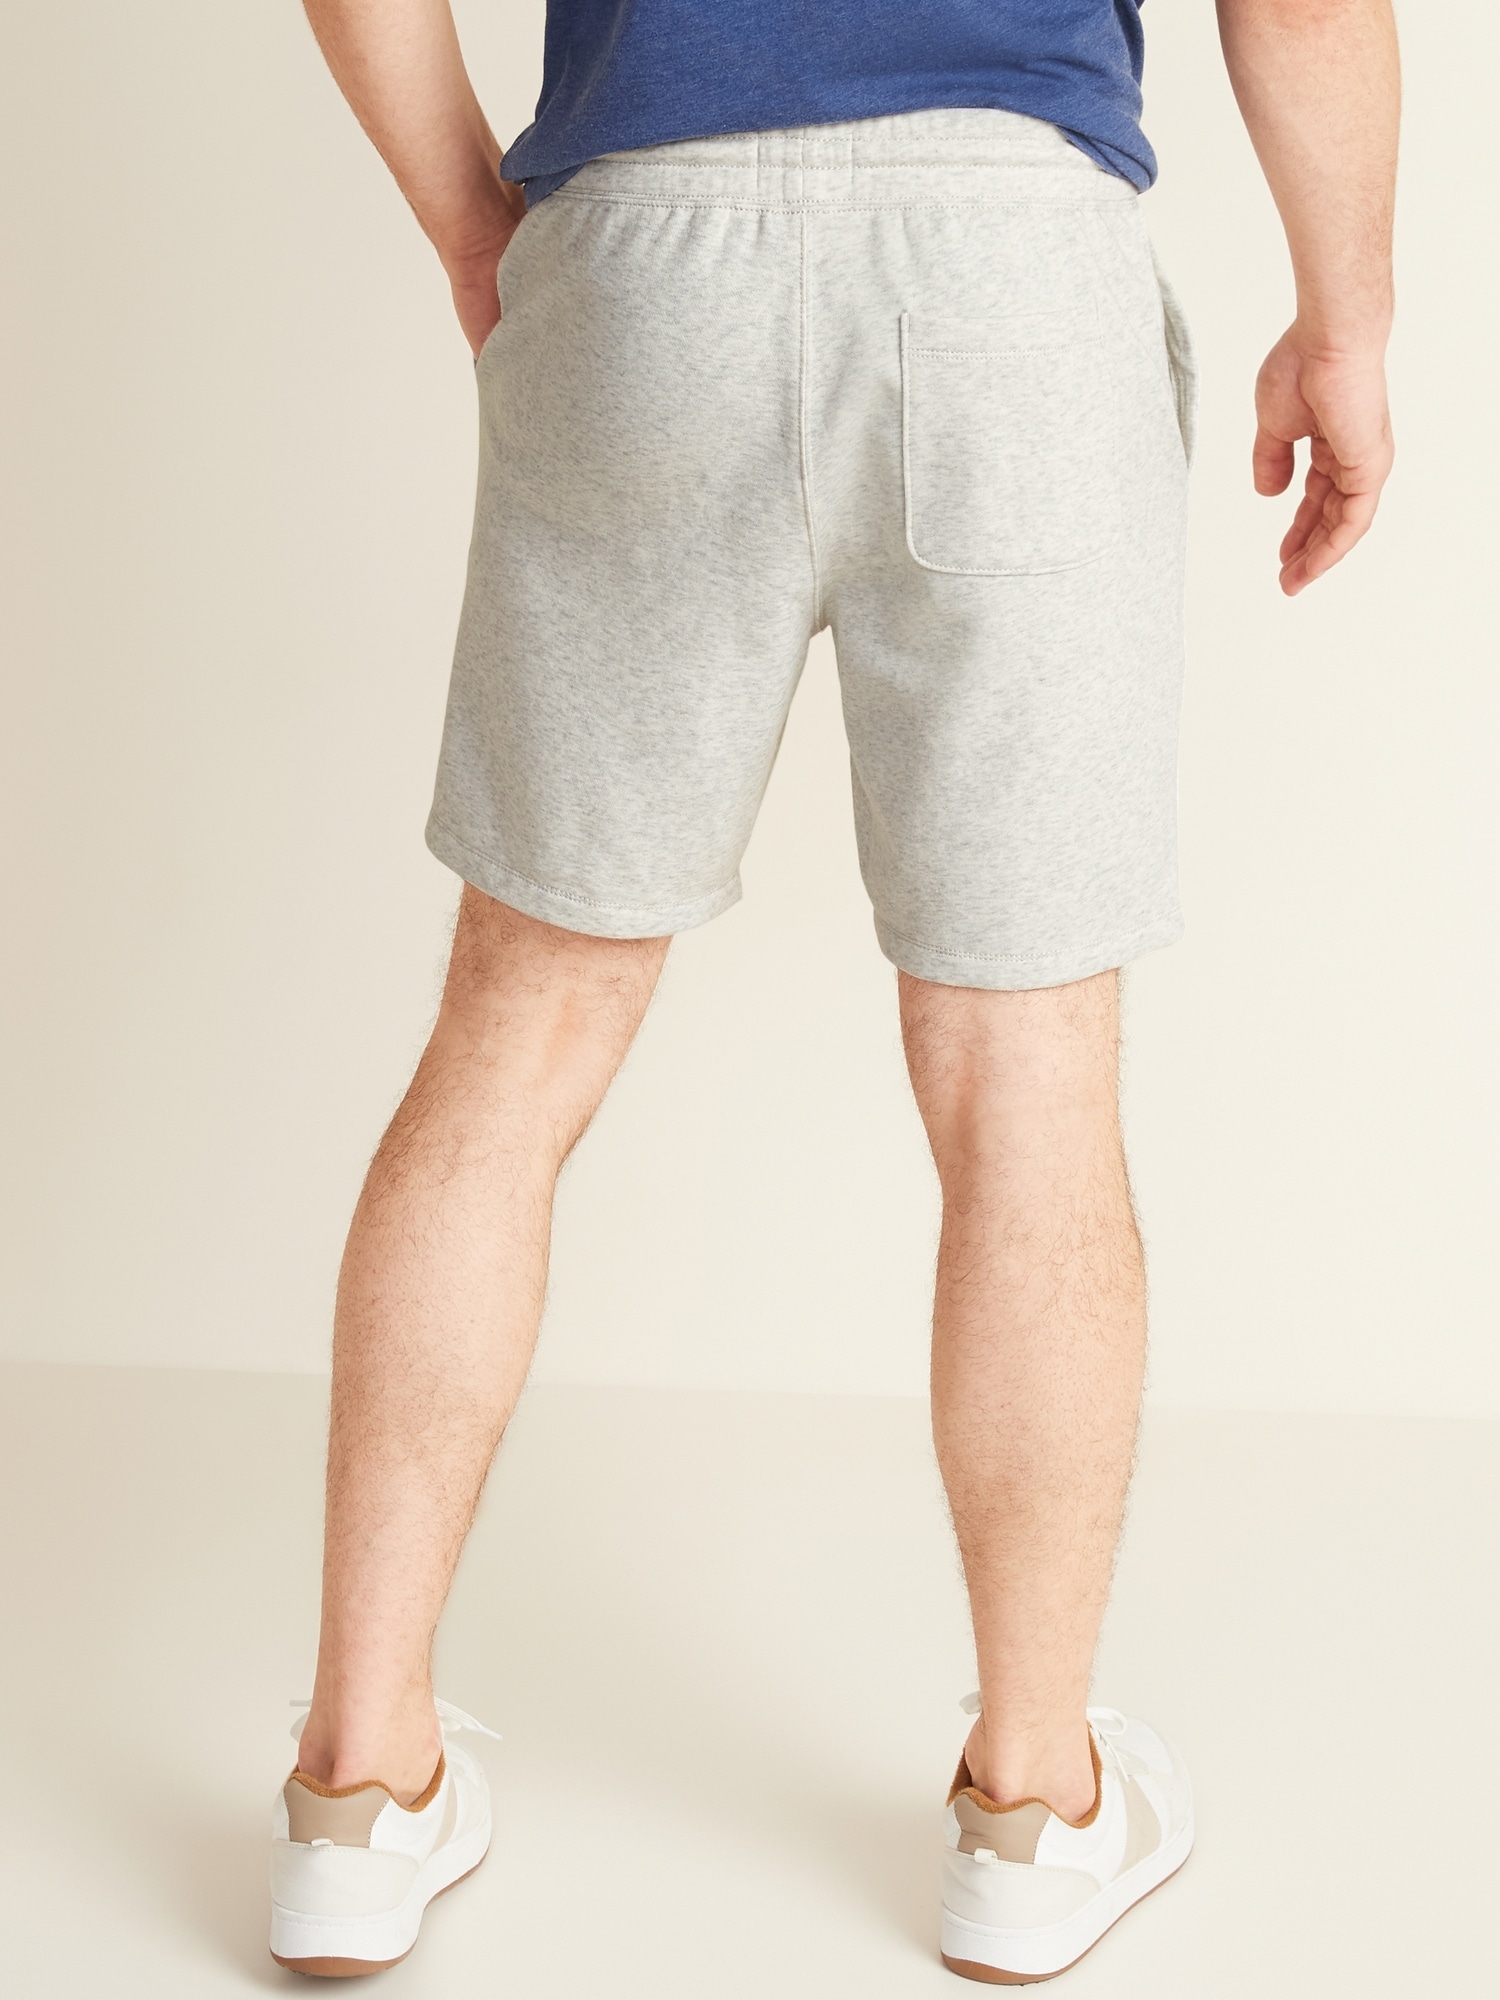  Men's Jogger Shorts